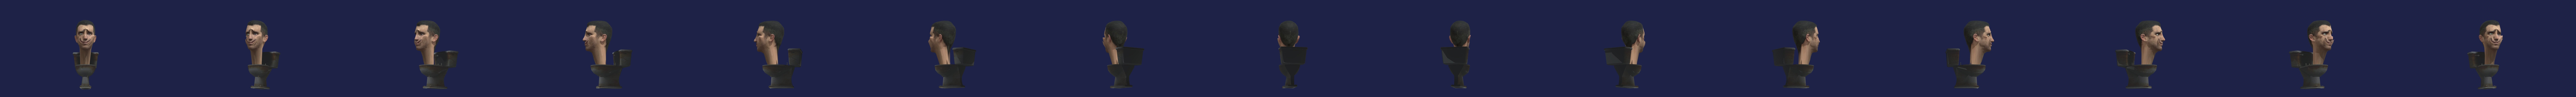 male_07 Skibidi toilet (by pamm) - 3D model by DaFuq?!Boom